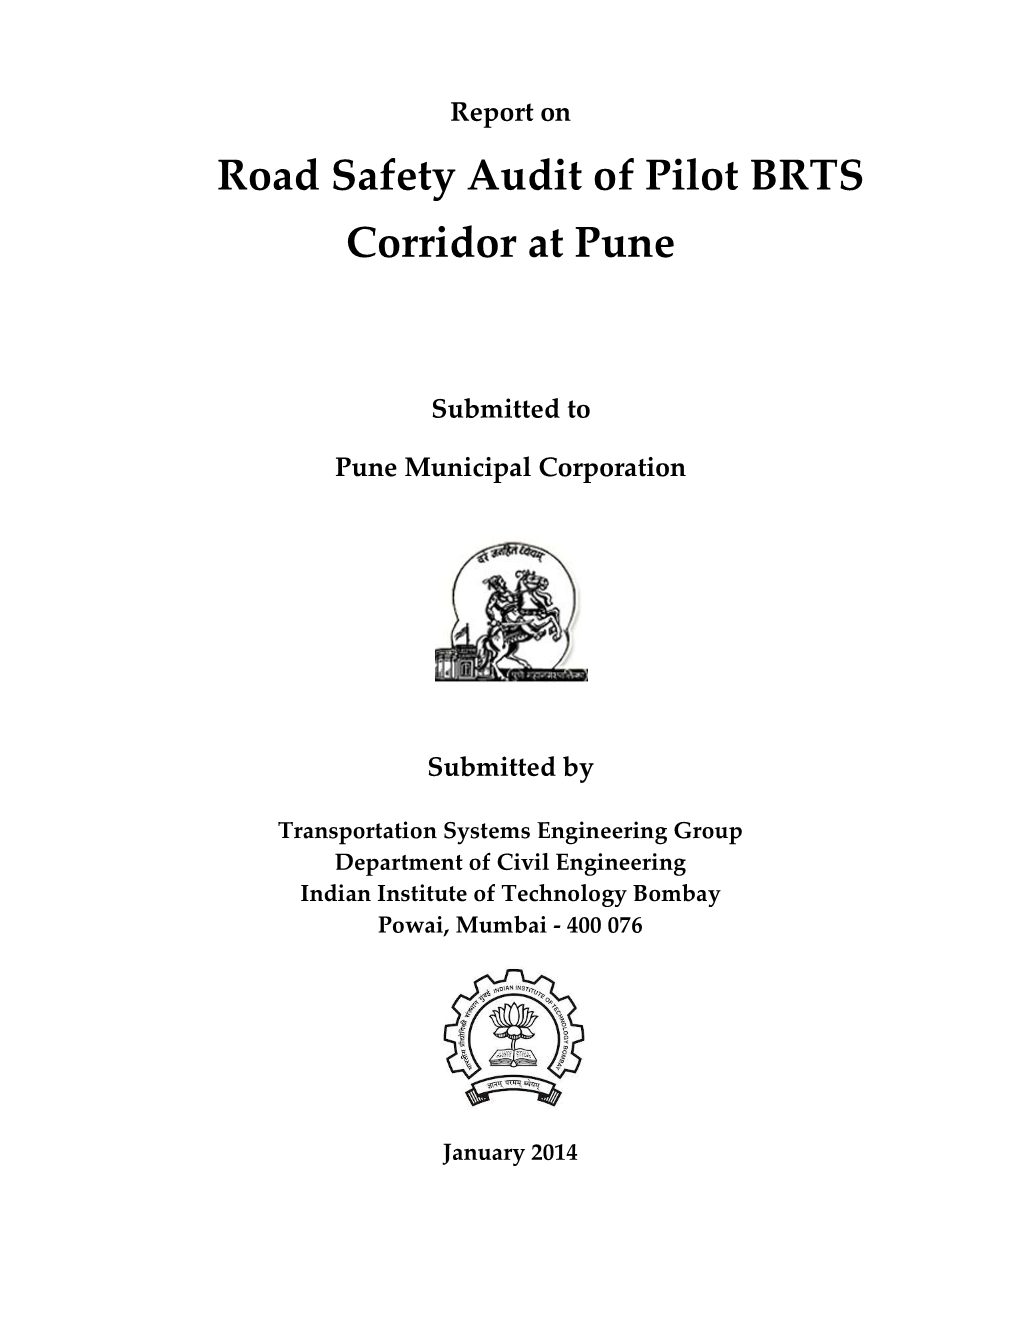 Road Safety Audit of Pilot BRTS Corridor at Pune